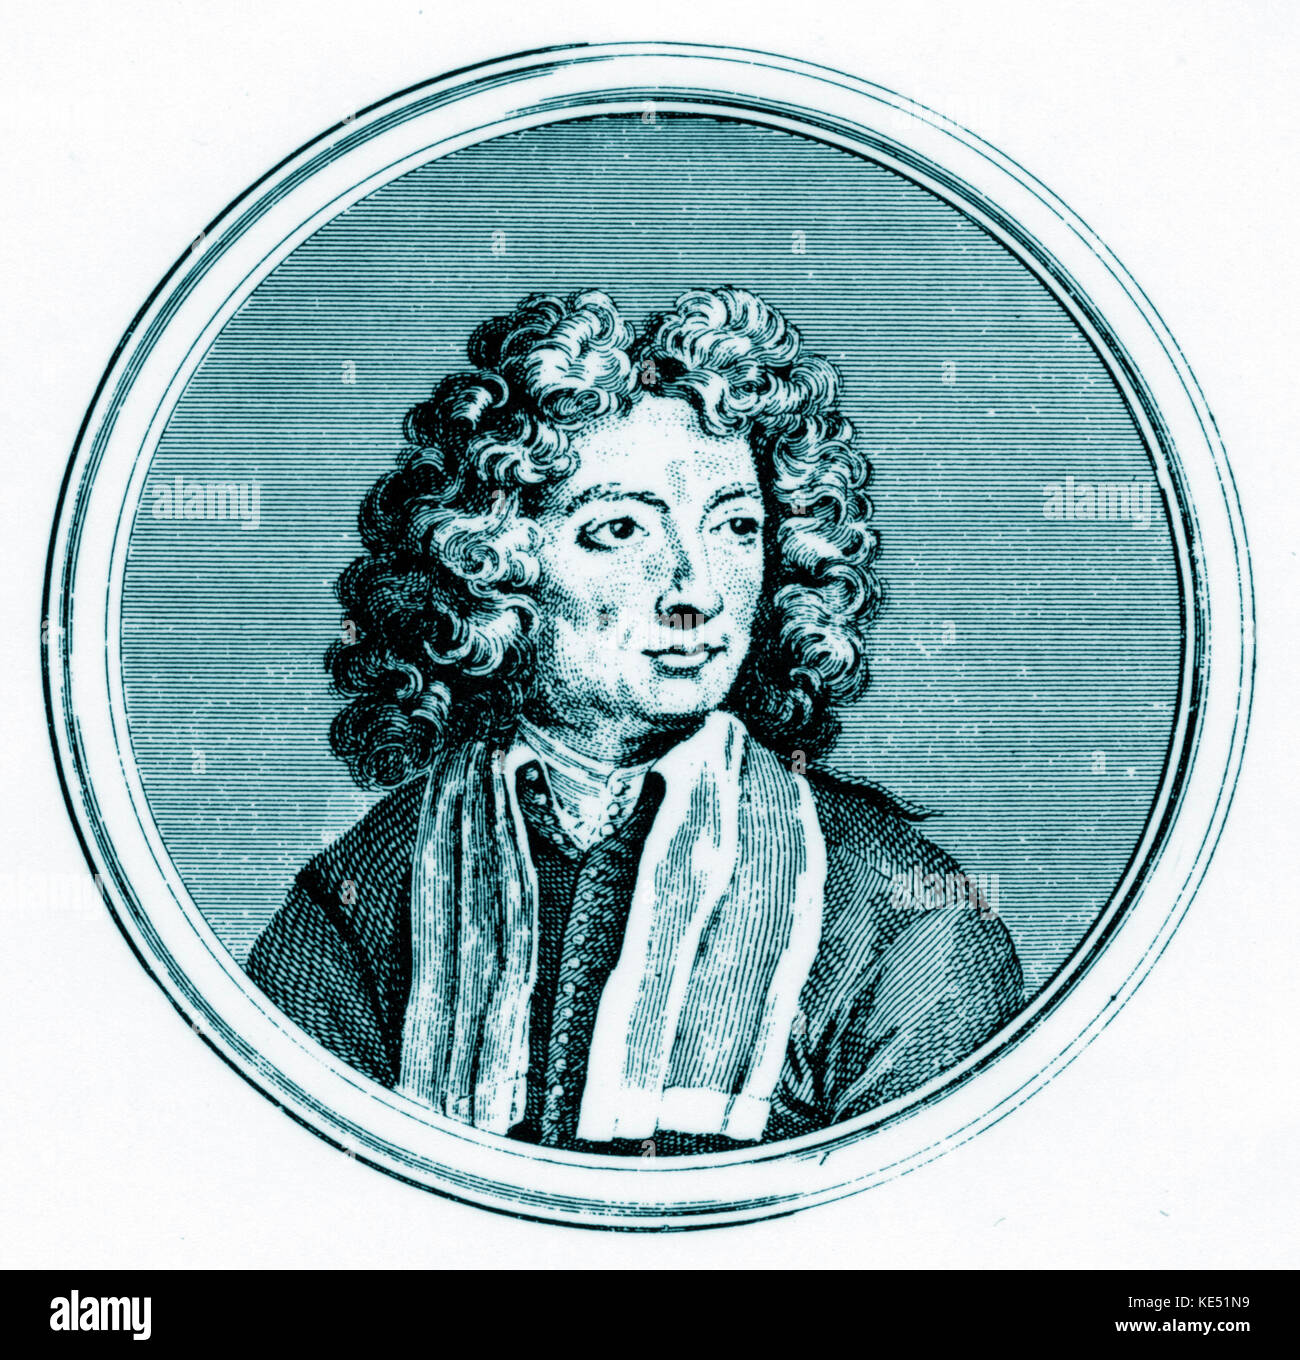 Arcangelo Corelli  portrait.  Italian composer & violinist. 17 February 1653 - 8 January 1713 Stock Photo